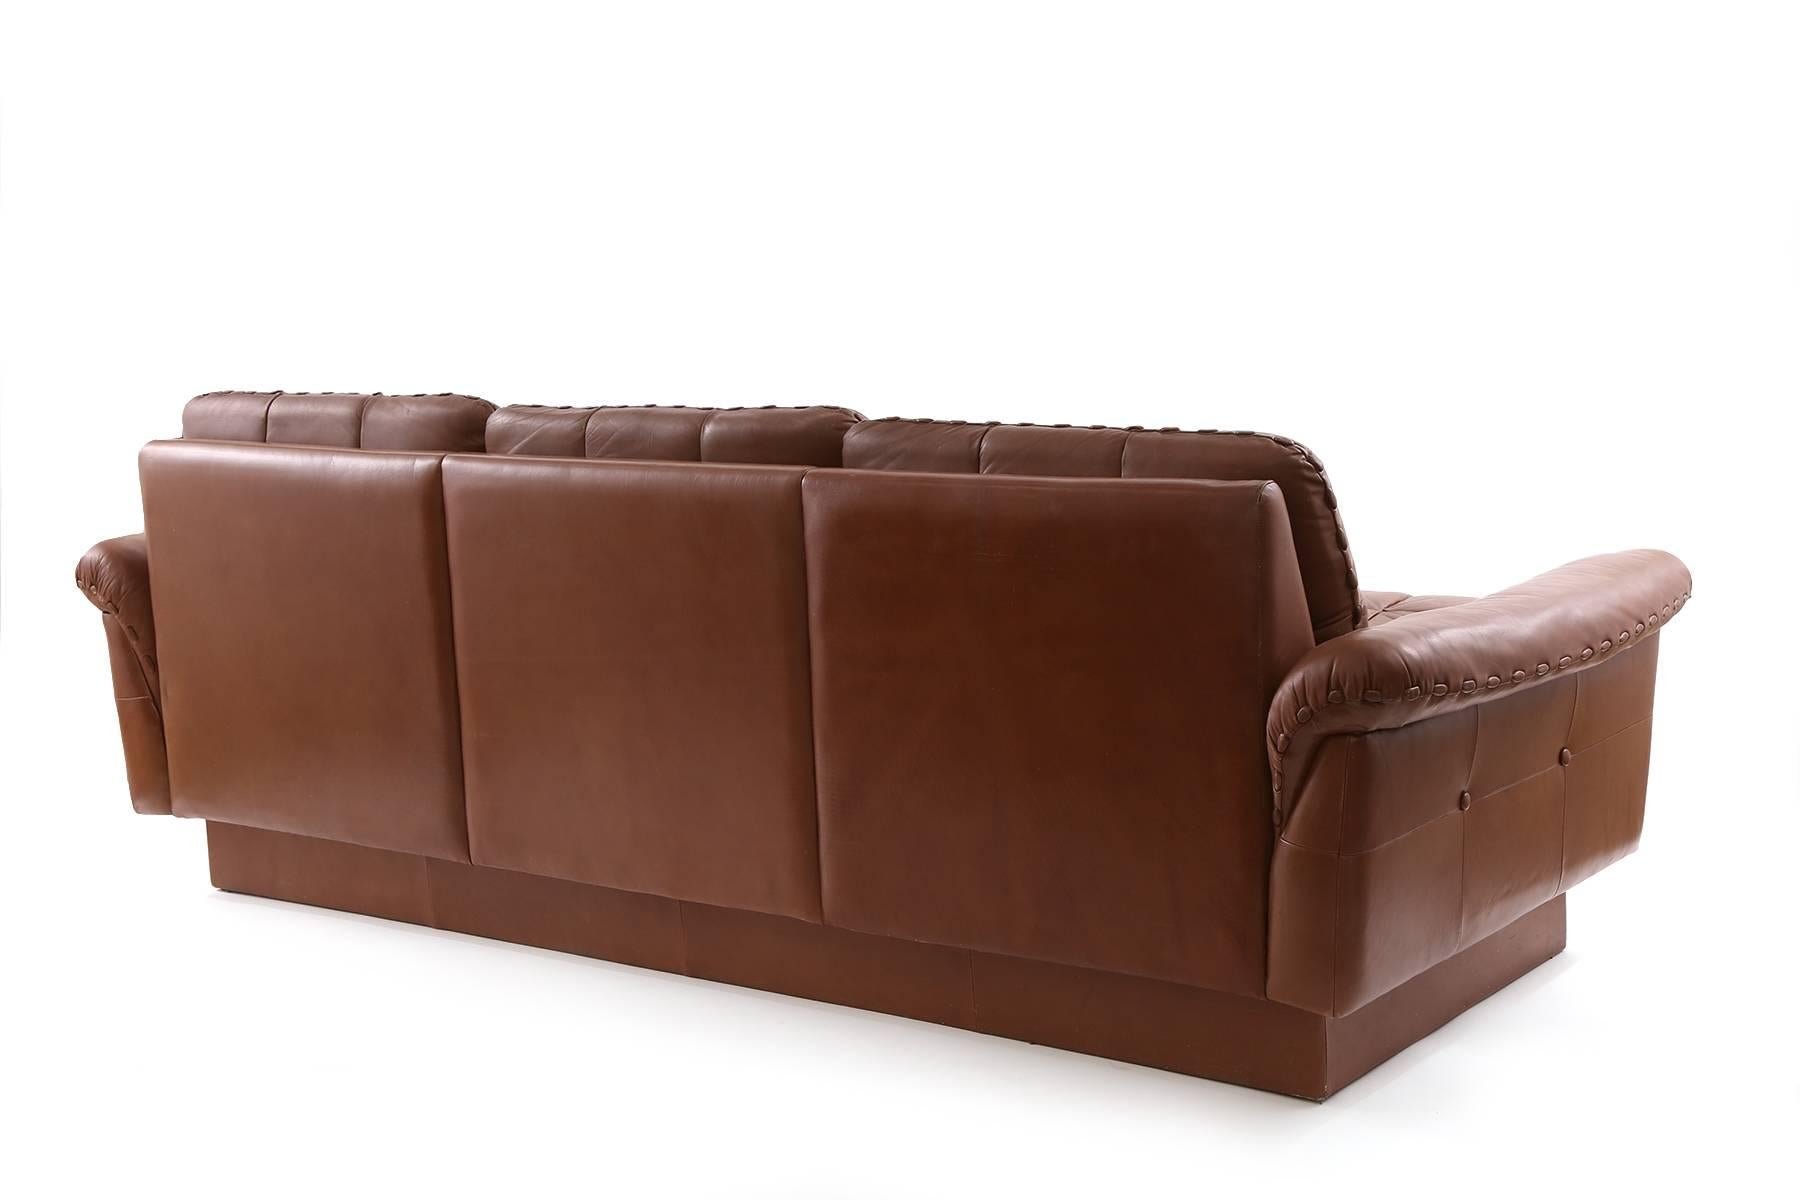 leather sofa with baseball stitching